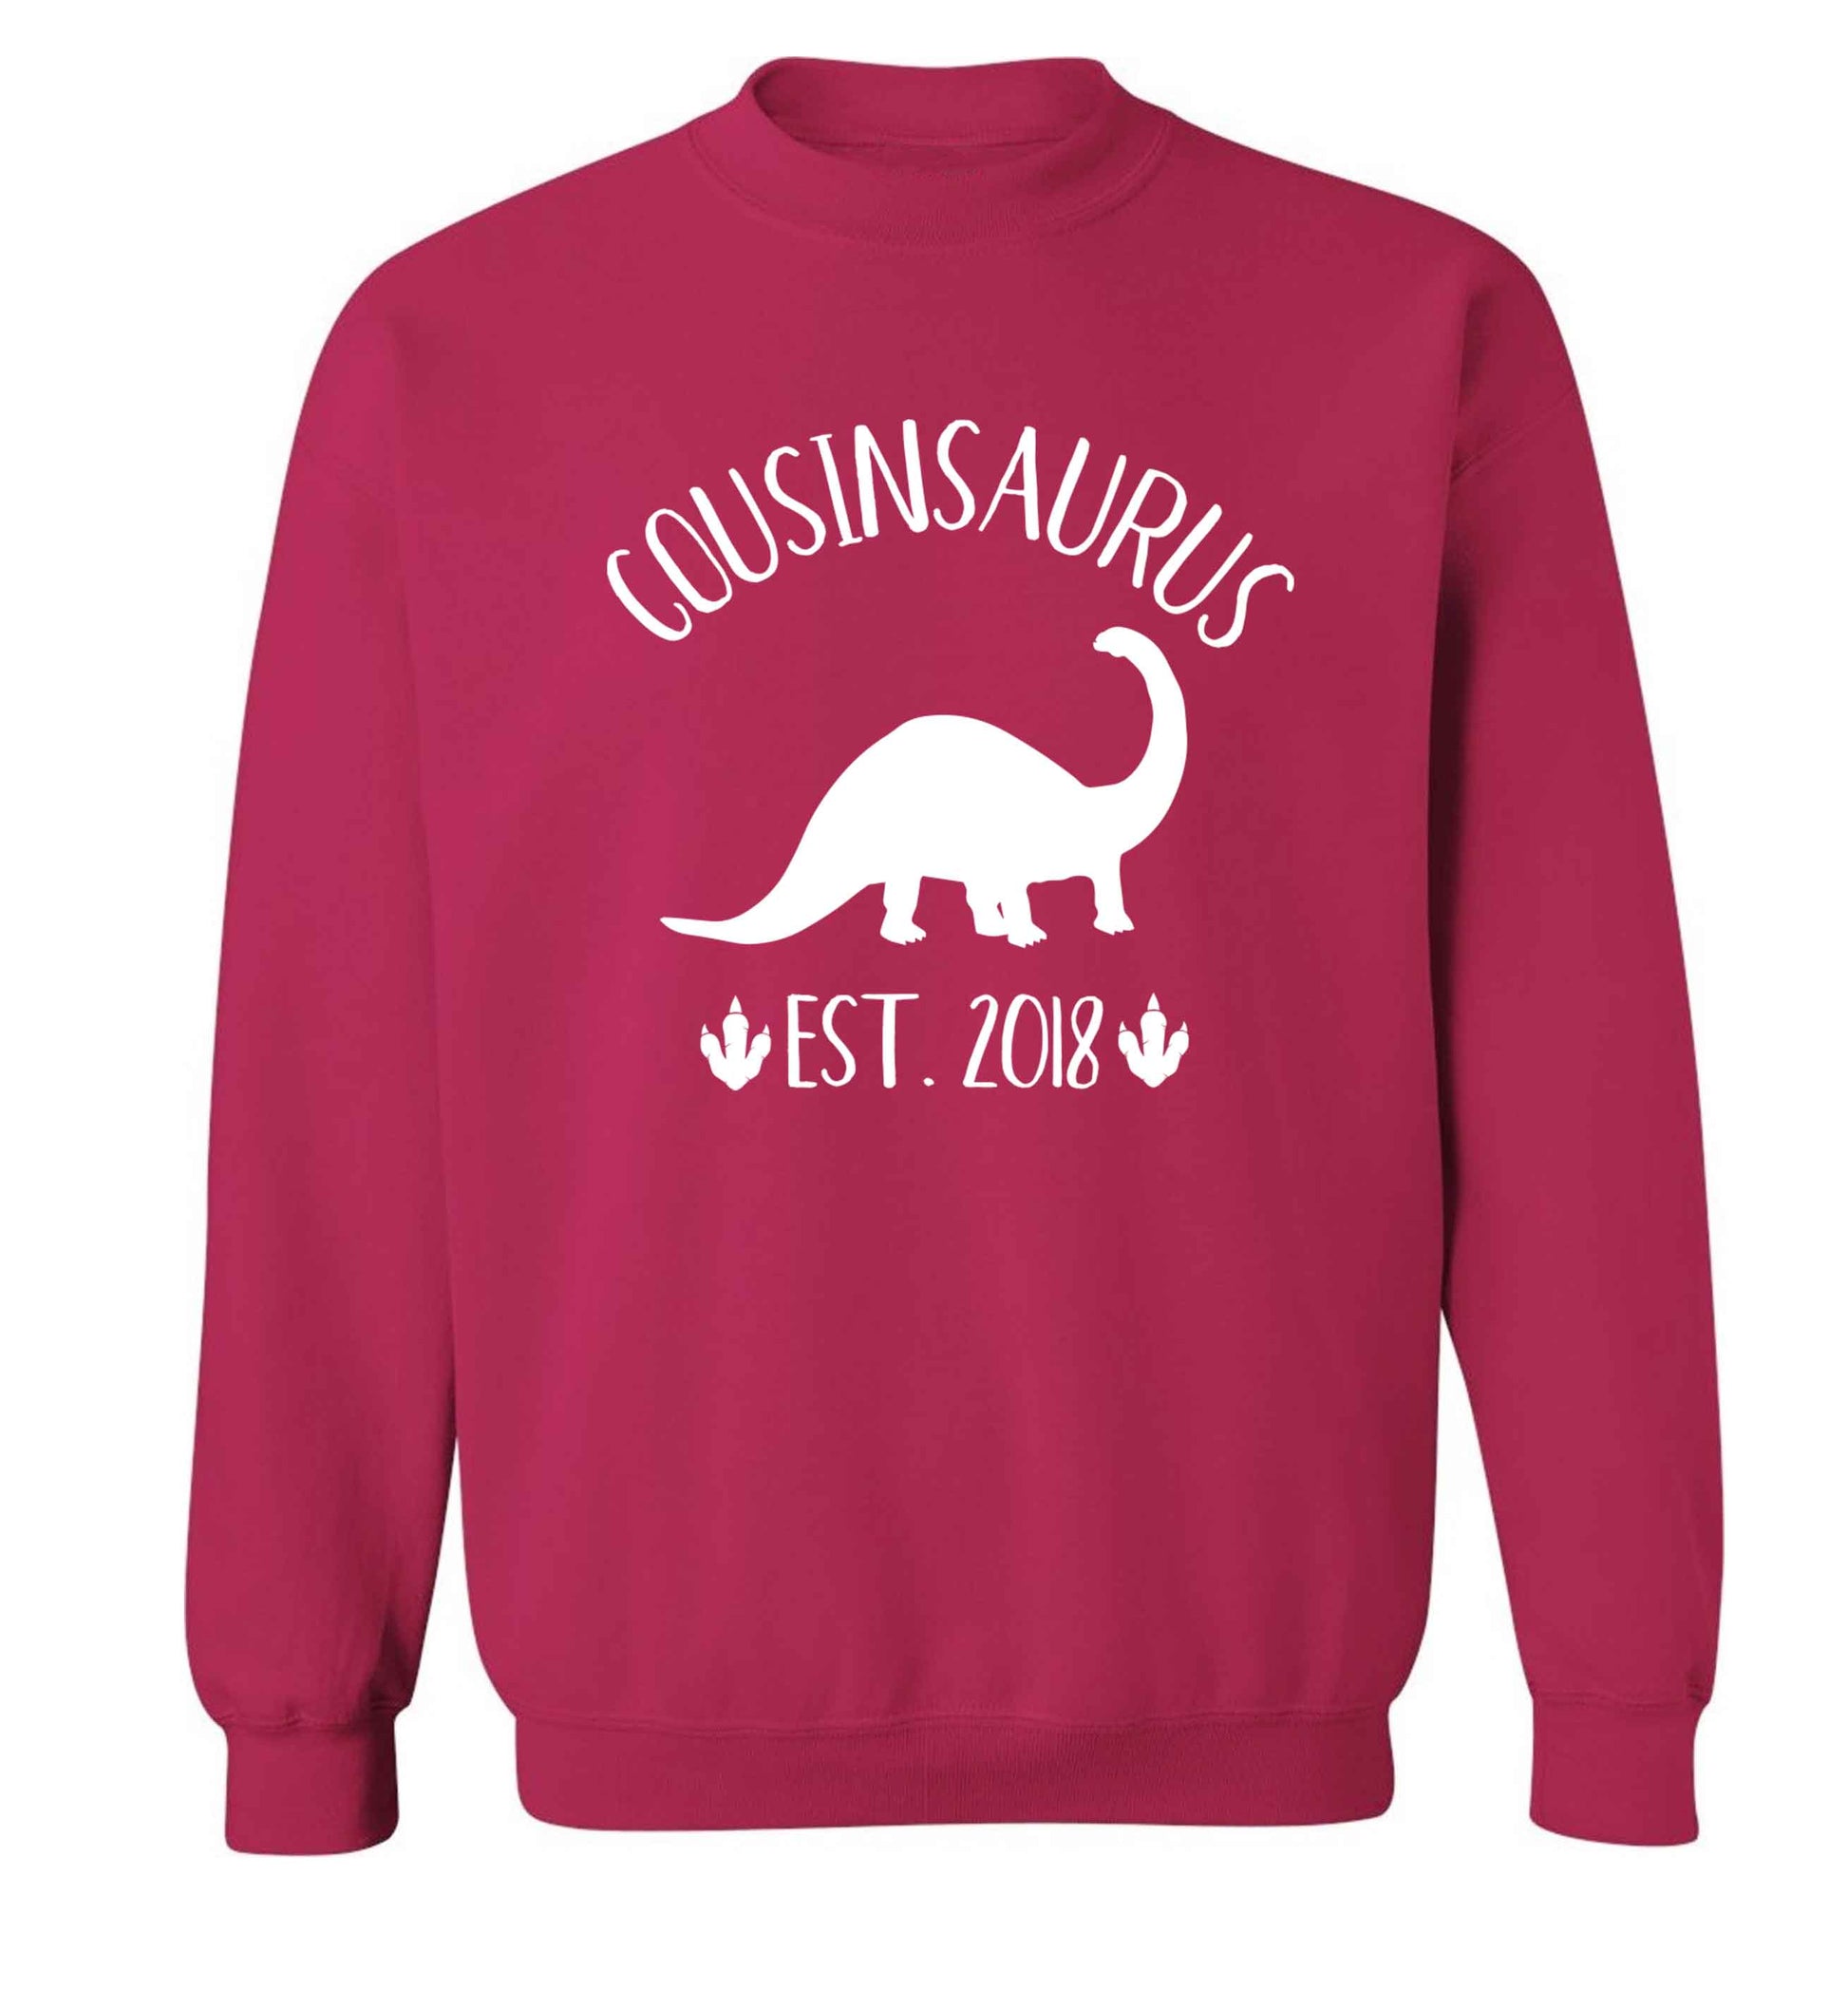 Personalised cousinsaurus since (custom date) Adult's unisex pink Sweater 2XL